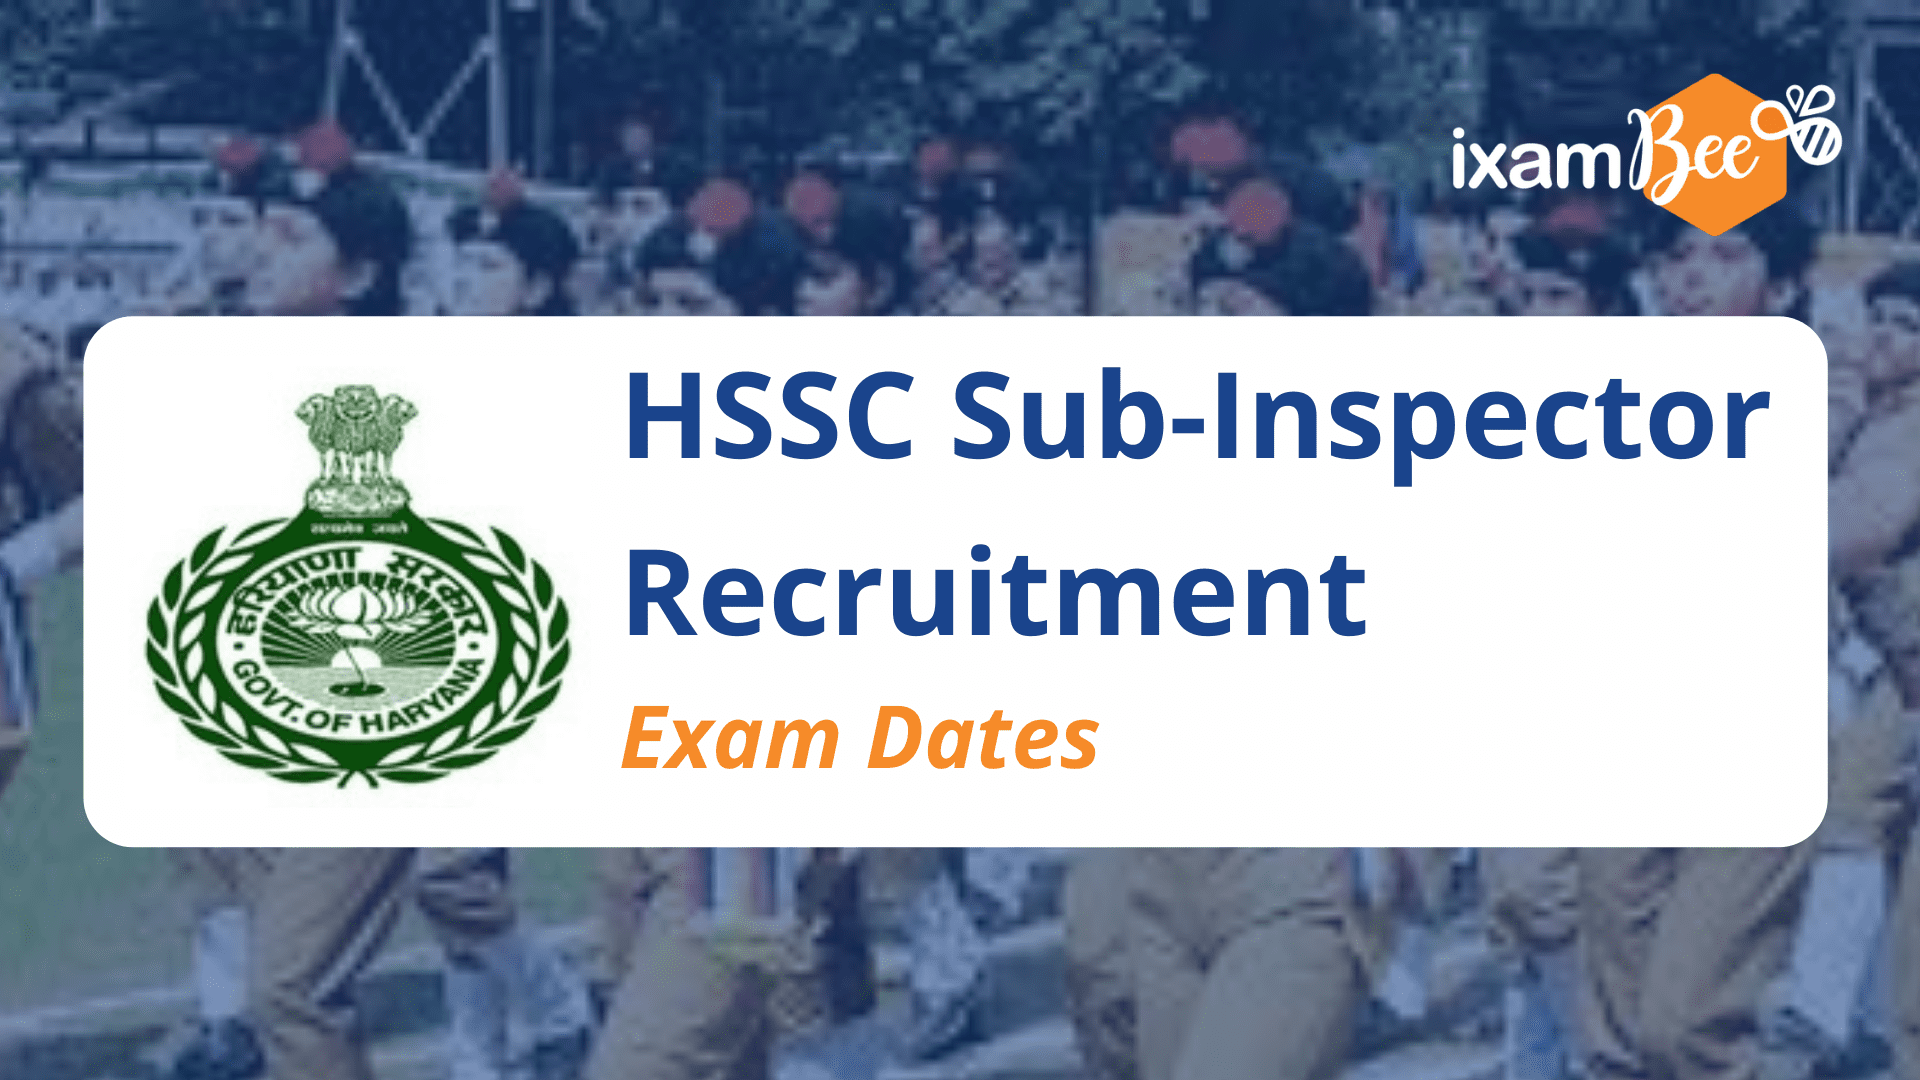 HSSC Sub-Inspector Recruitment Exam Dates